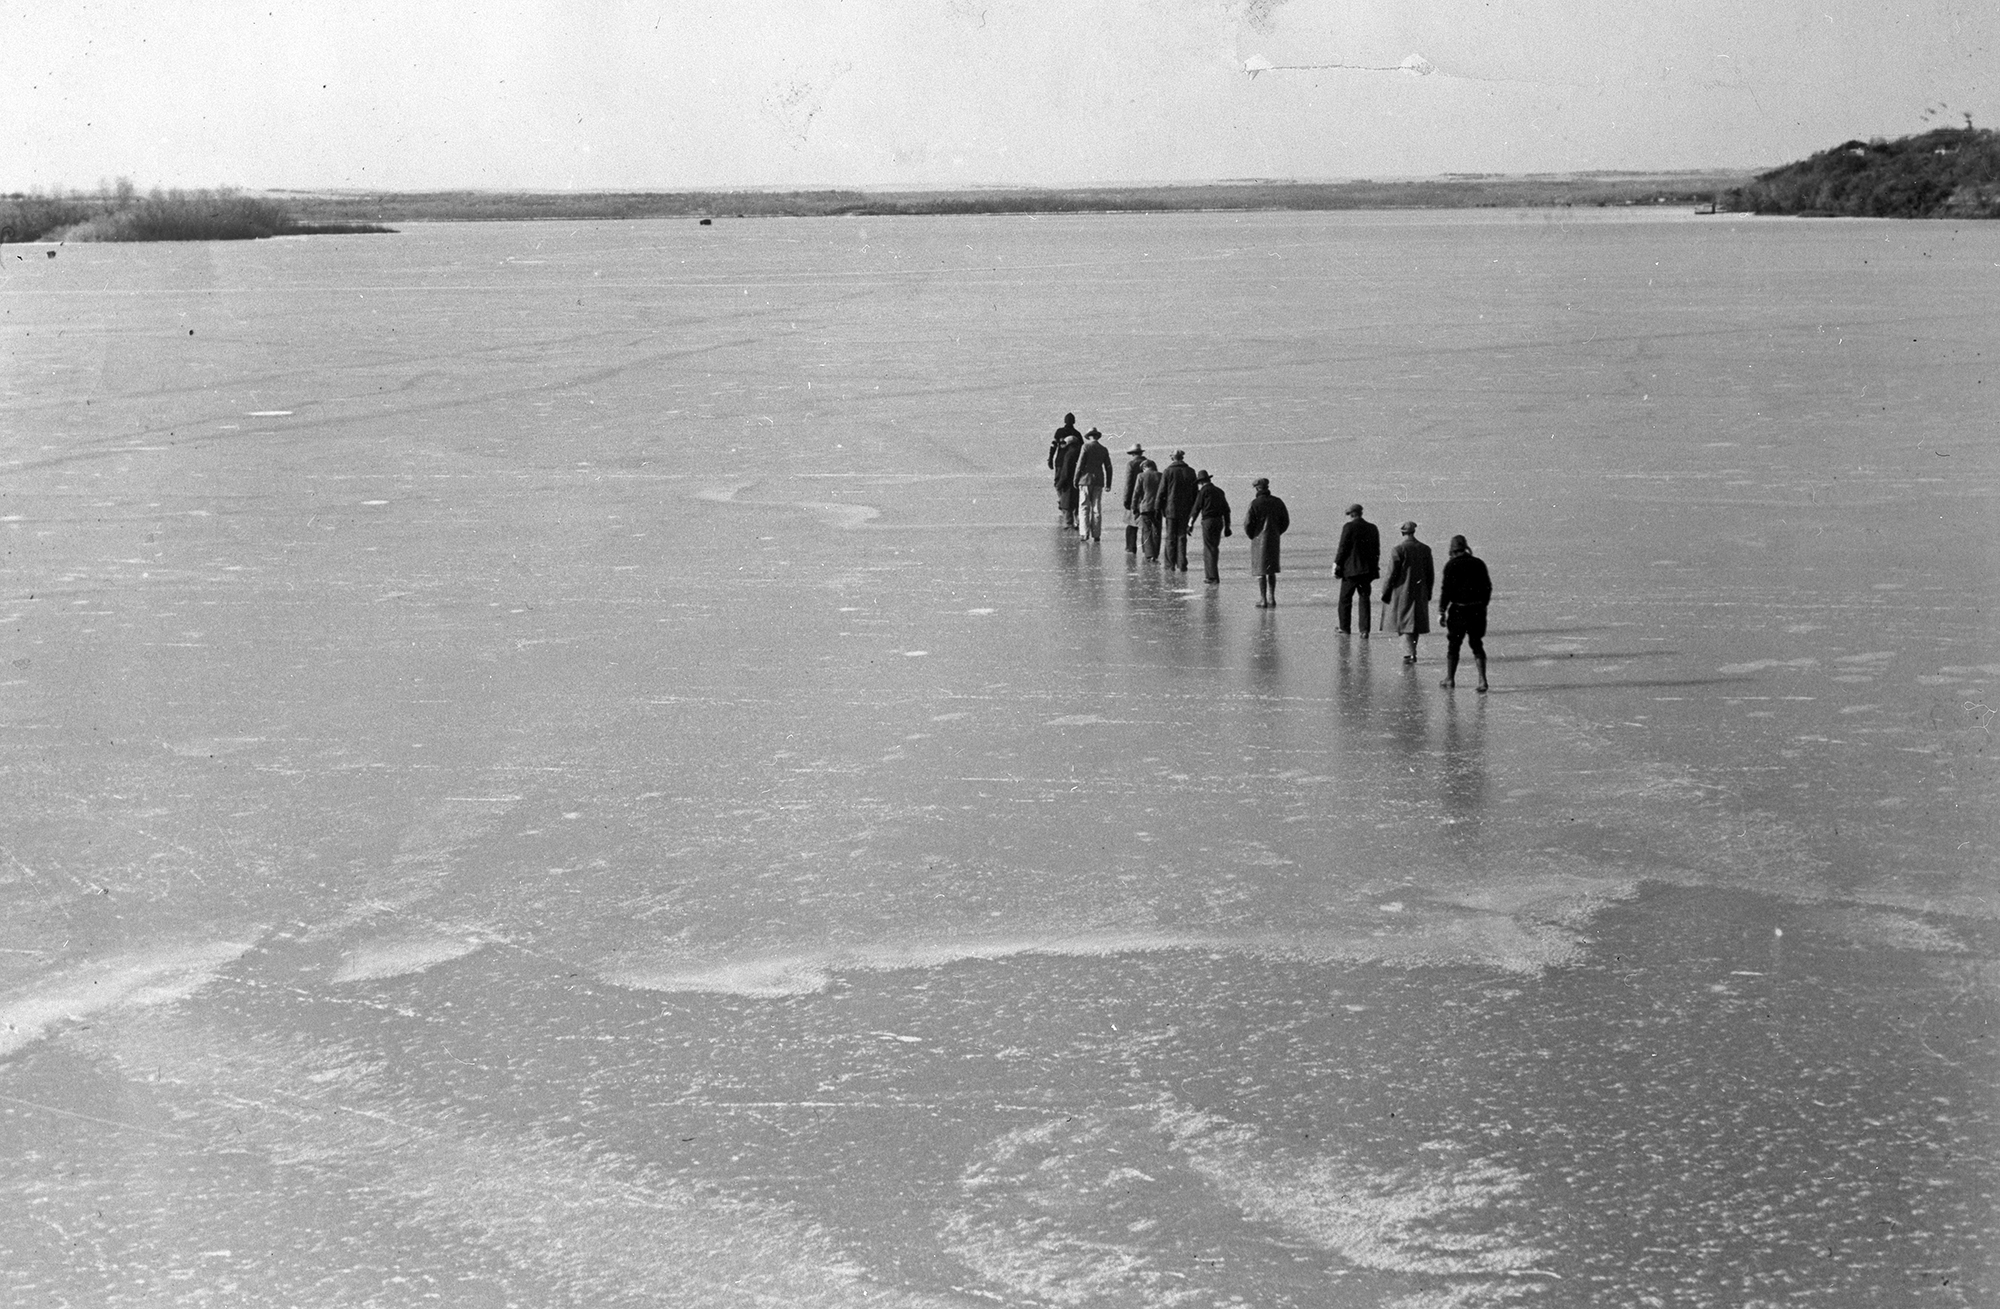 People walking across an iced-over lake.